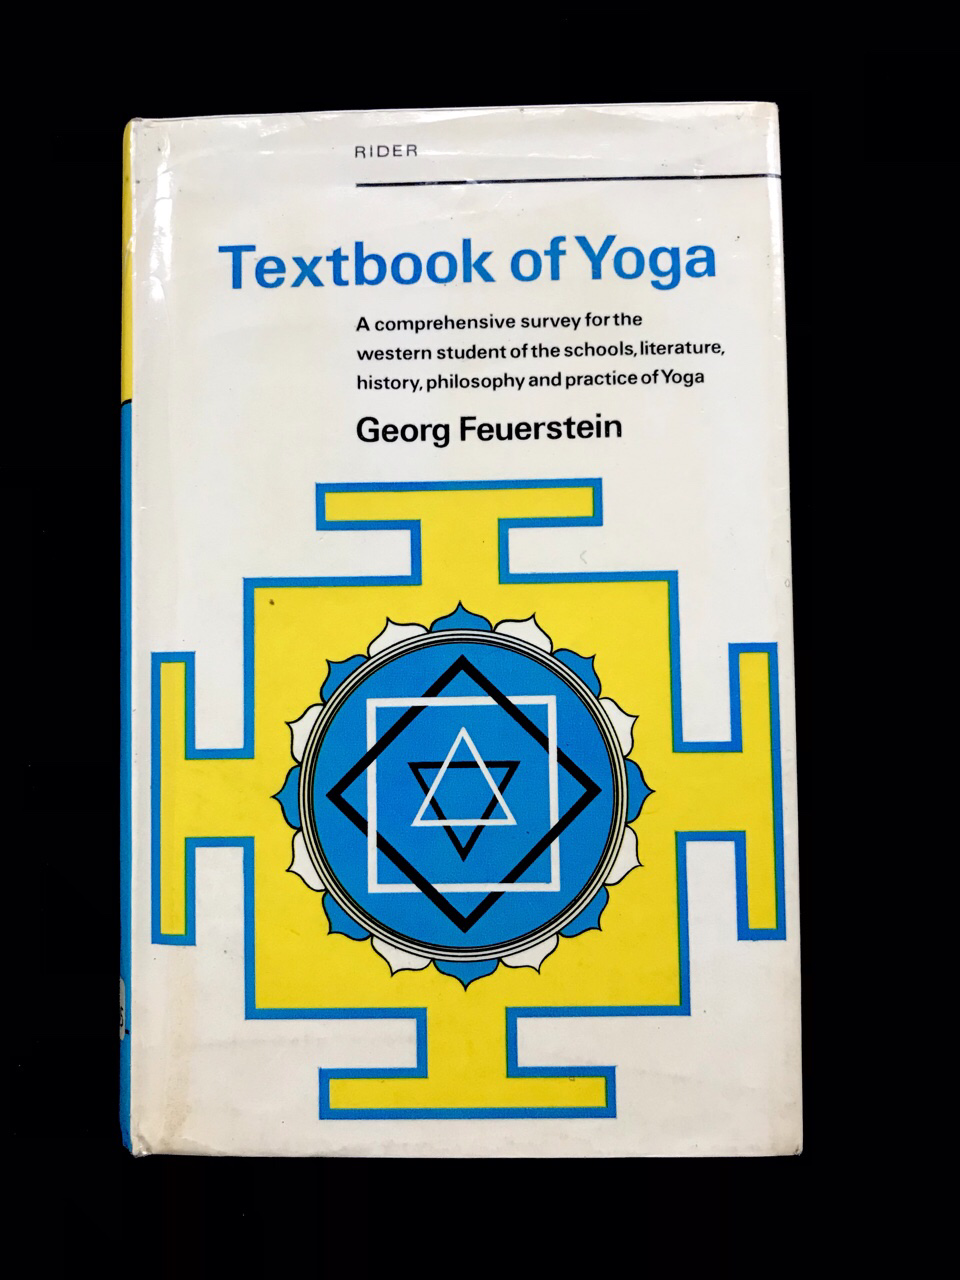 Textbook Of Yoga by Georg Feuerstein